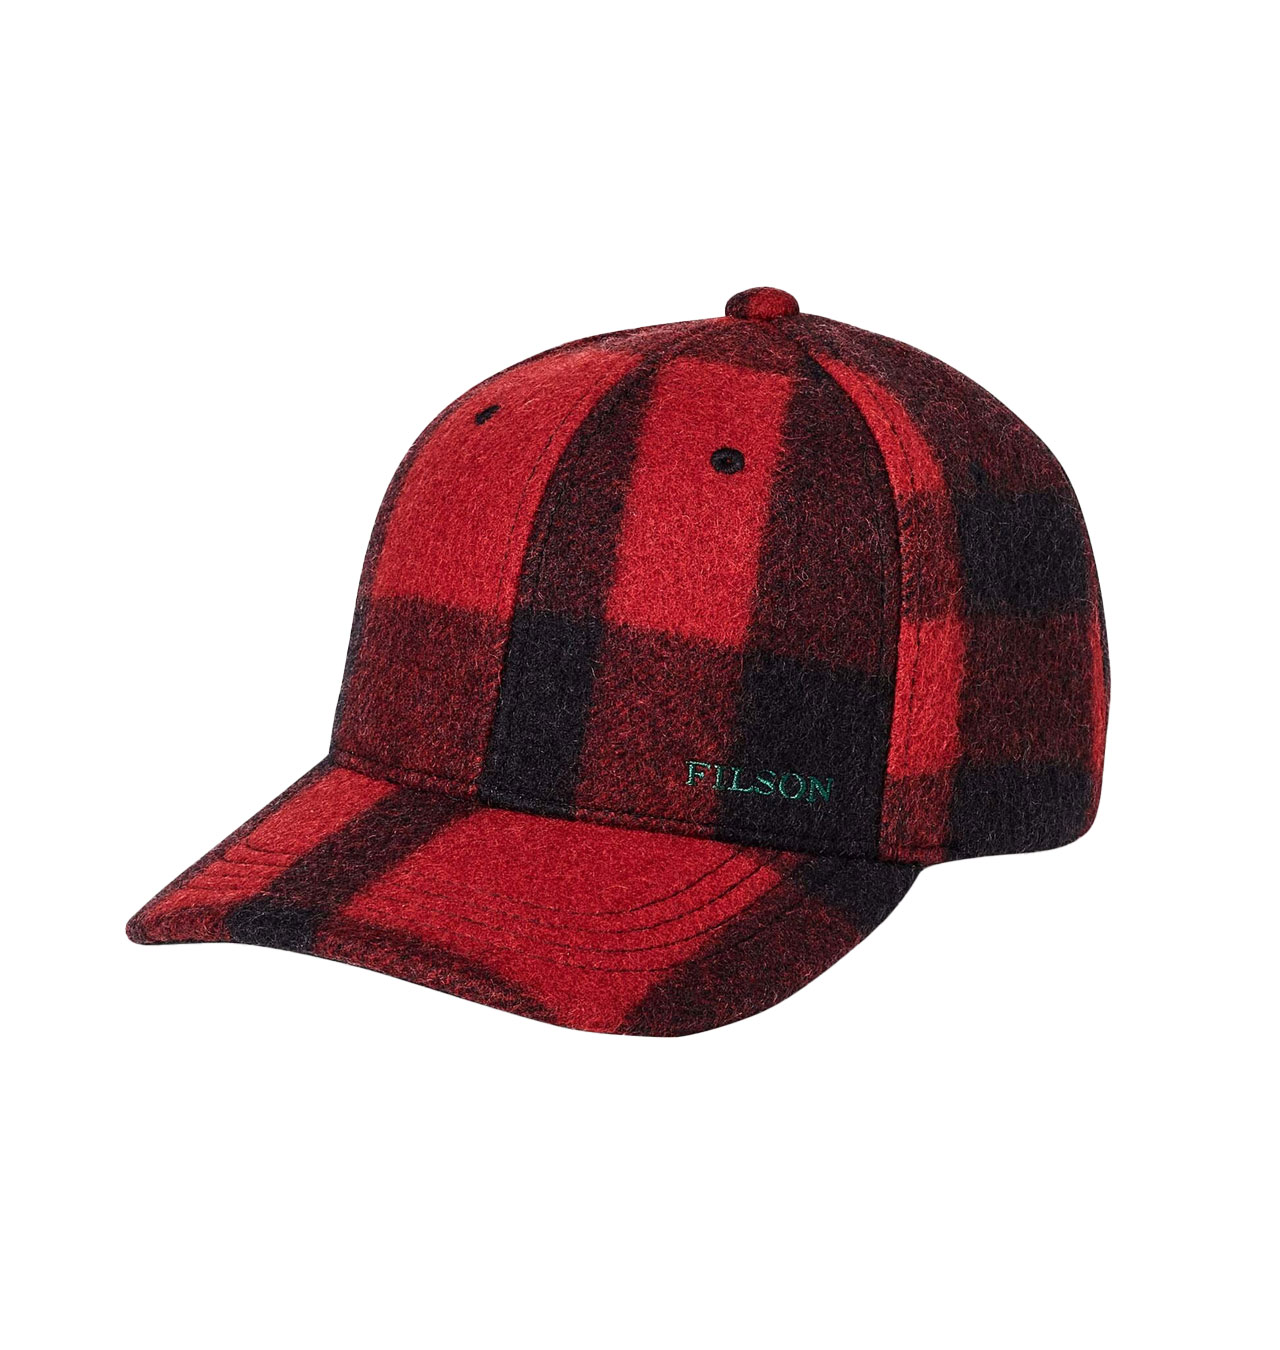 Filson - Wool Logger Cap - Red/Black Heritage